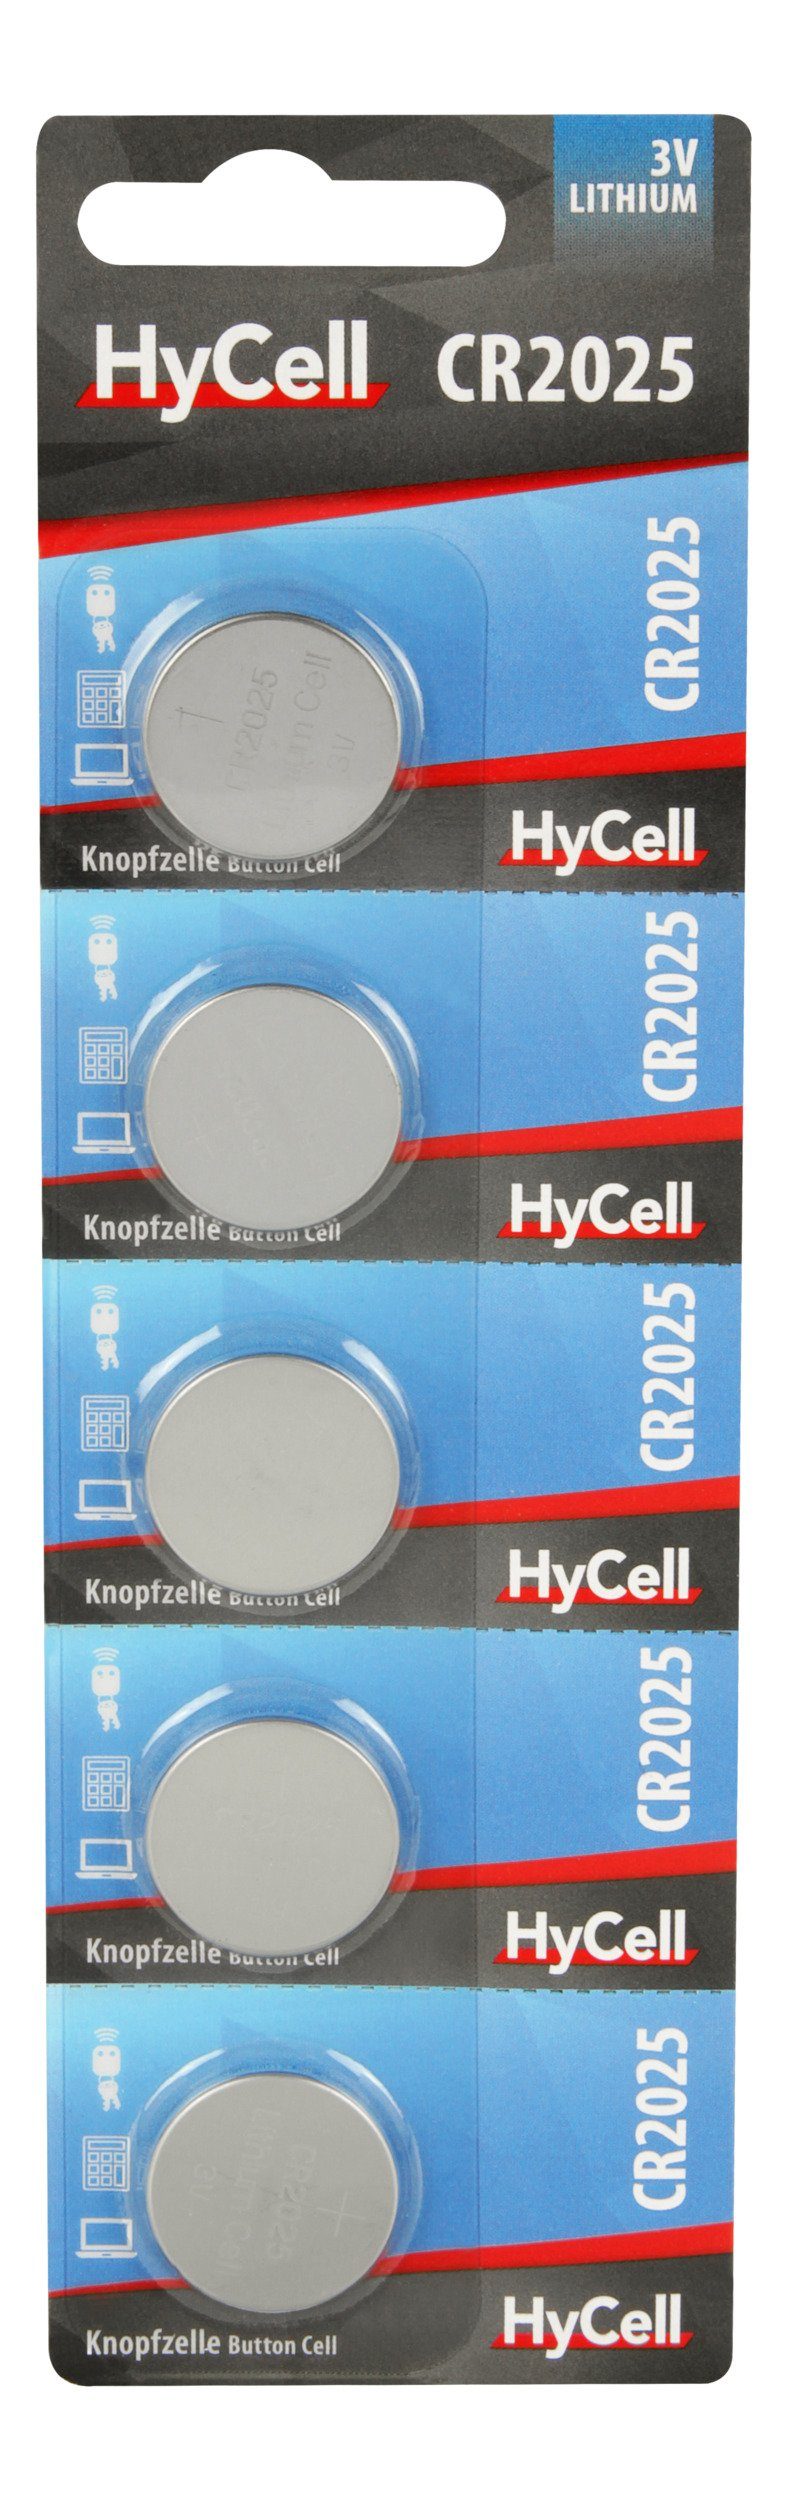 HyCell 5er Pack Lithium Knopfzellen CR2025 3V - Knopfbatterien - 5 Stück Knopfzelle